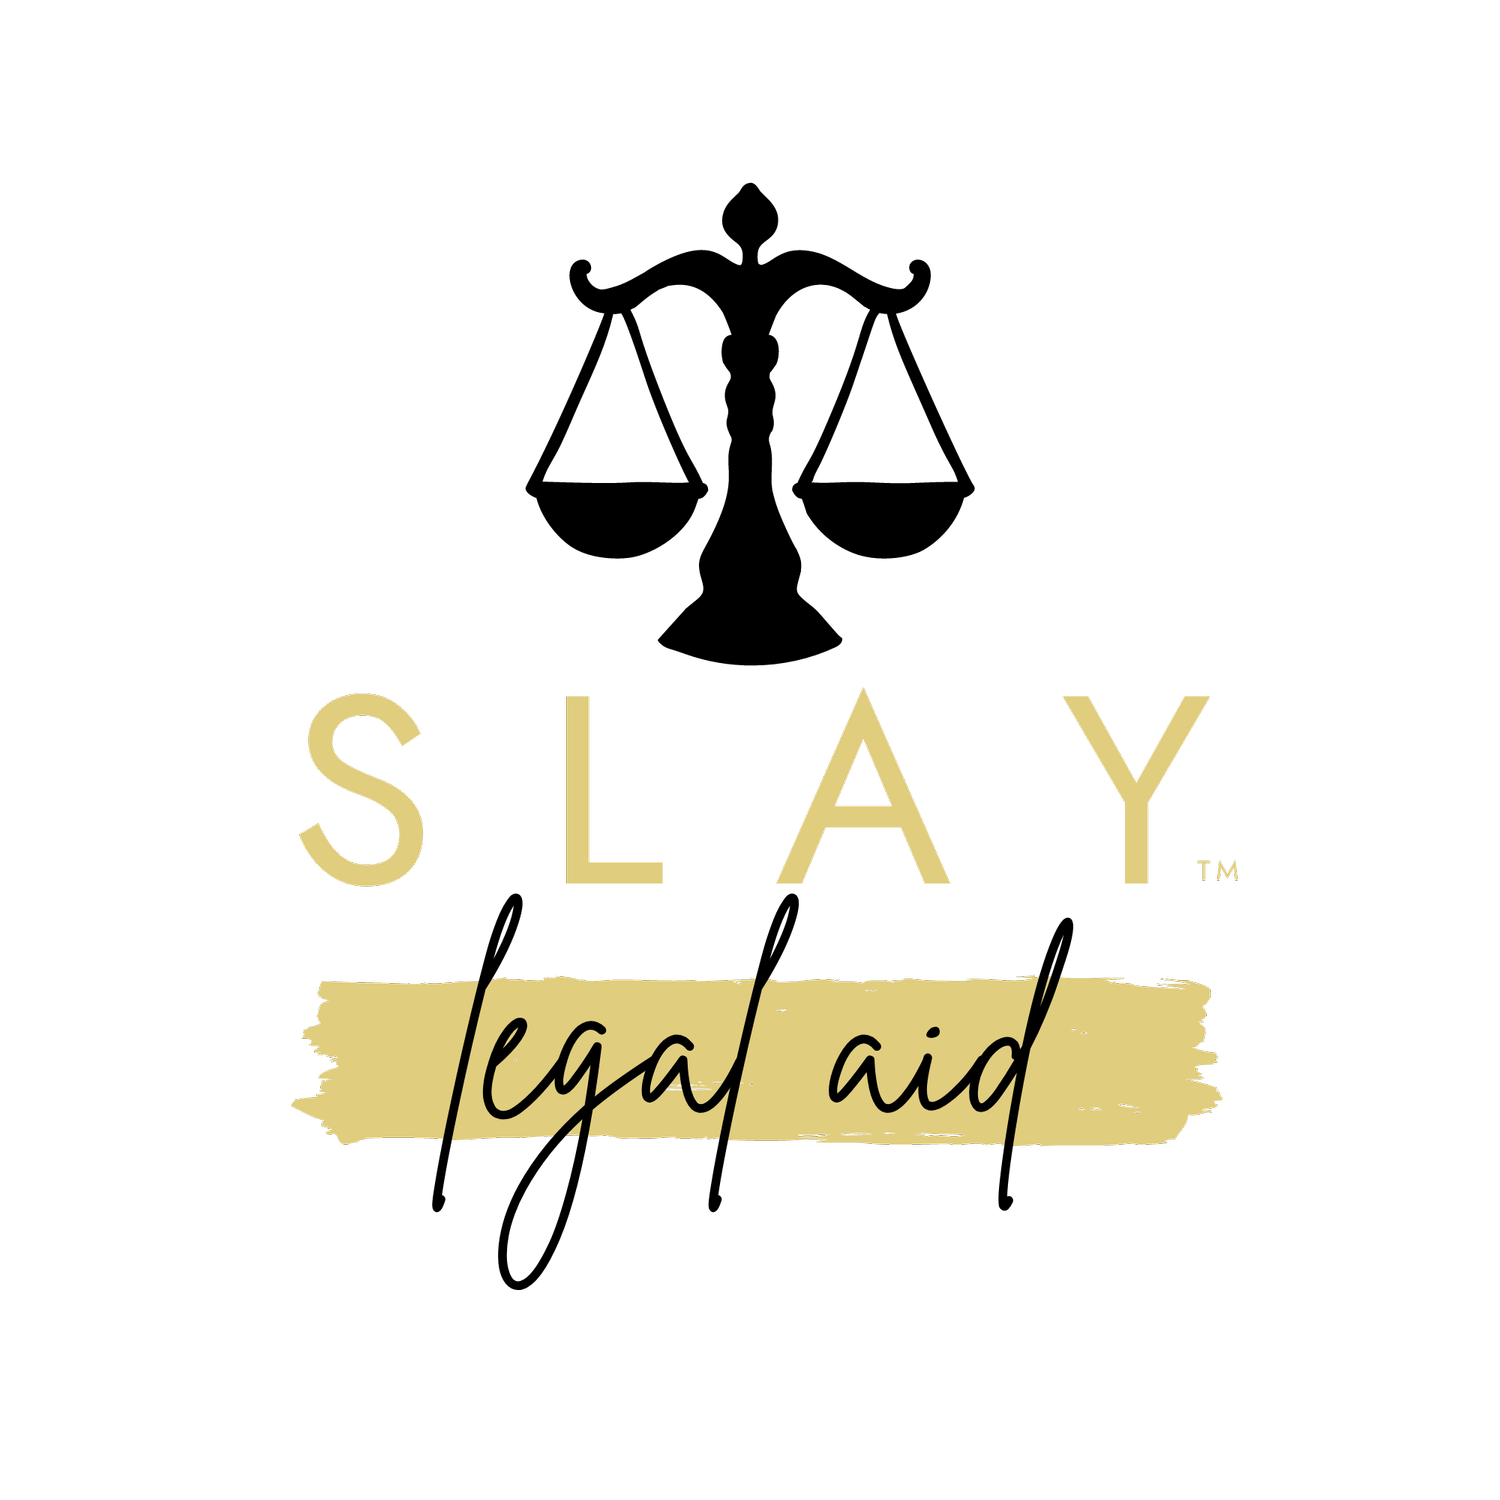 SLAY Legal Aid